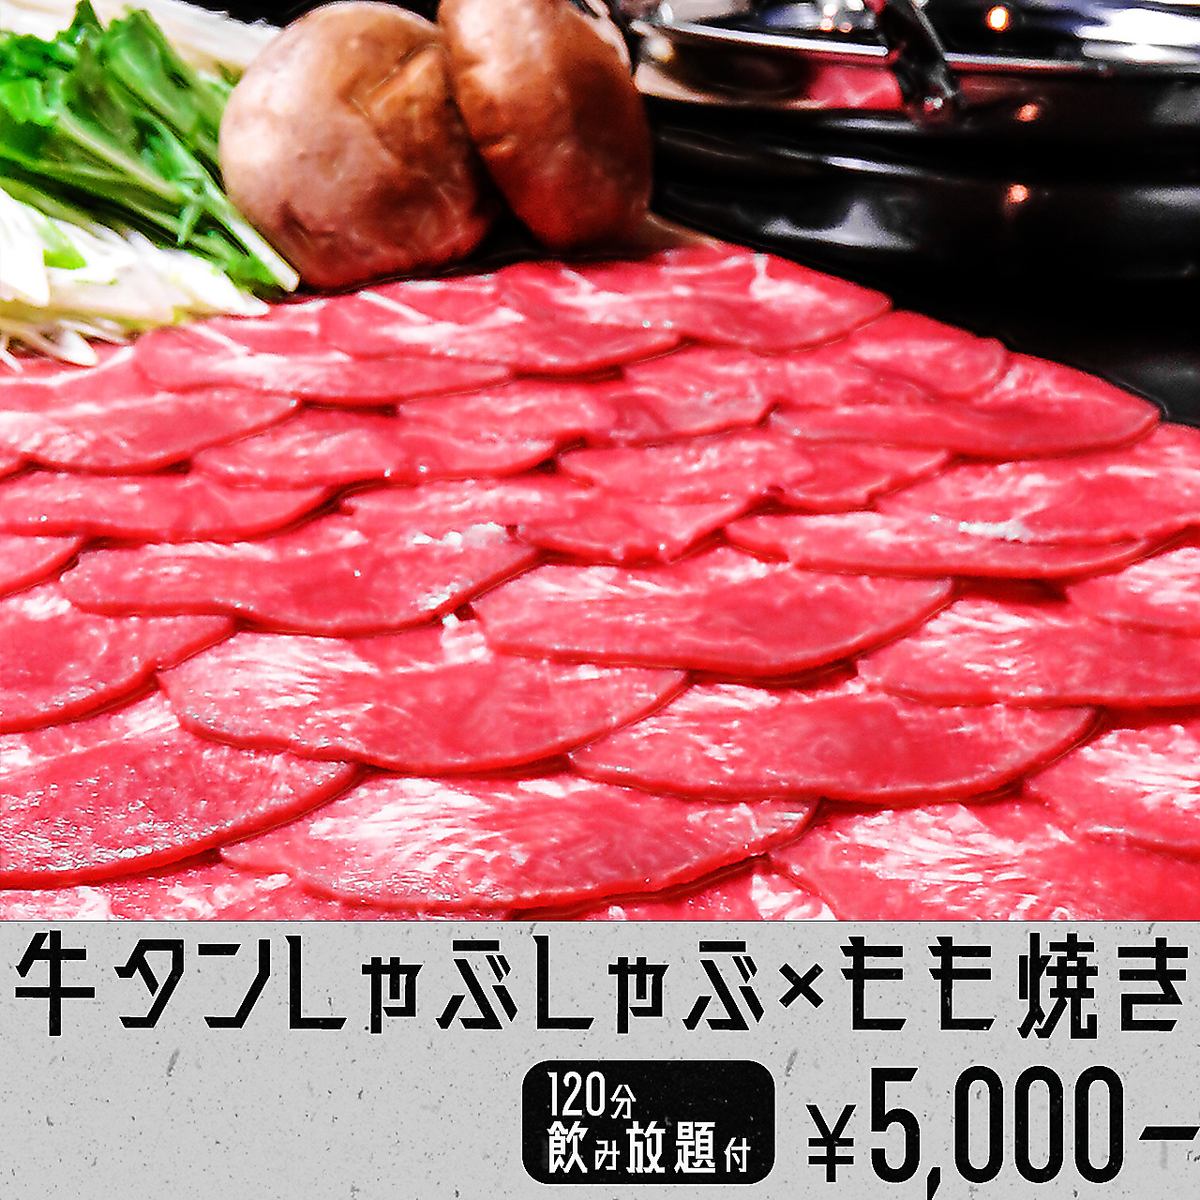 Have a luxurious hotpot party♪Enjoy our proud beef tongue shabu-shabu!